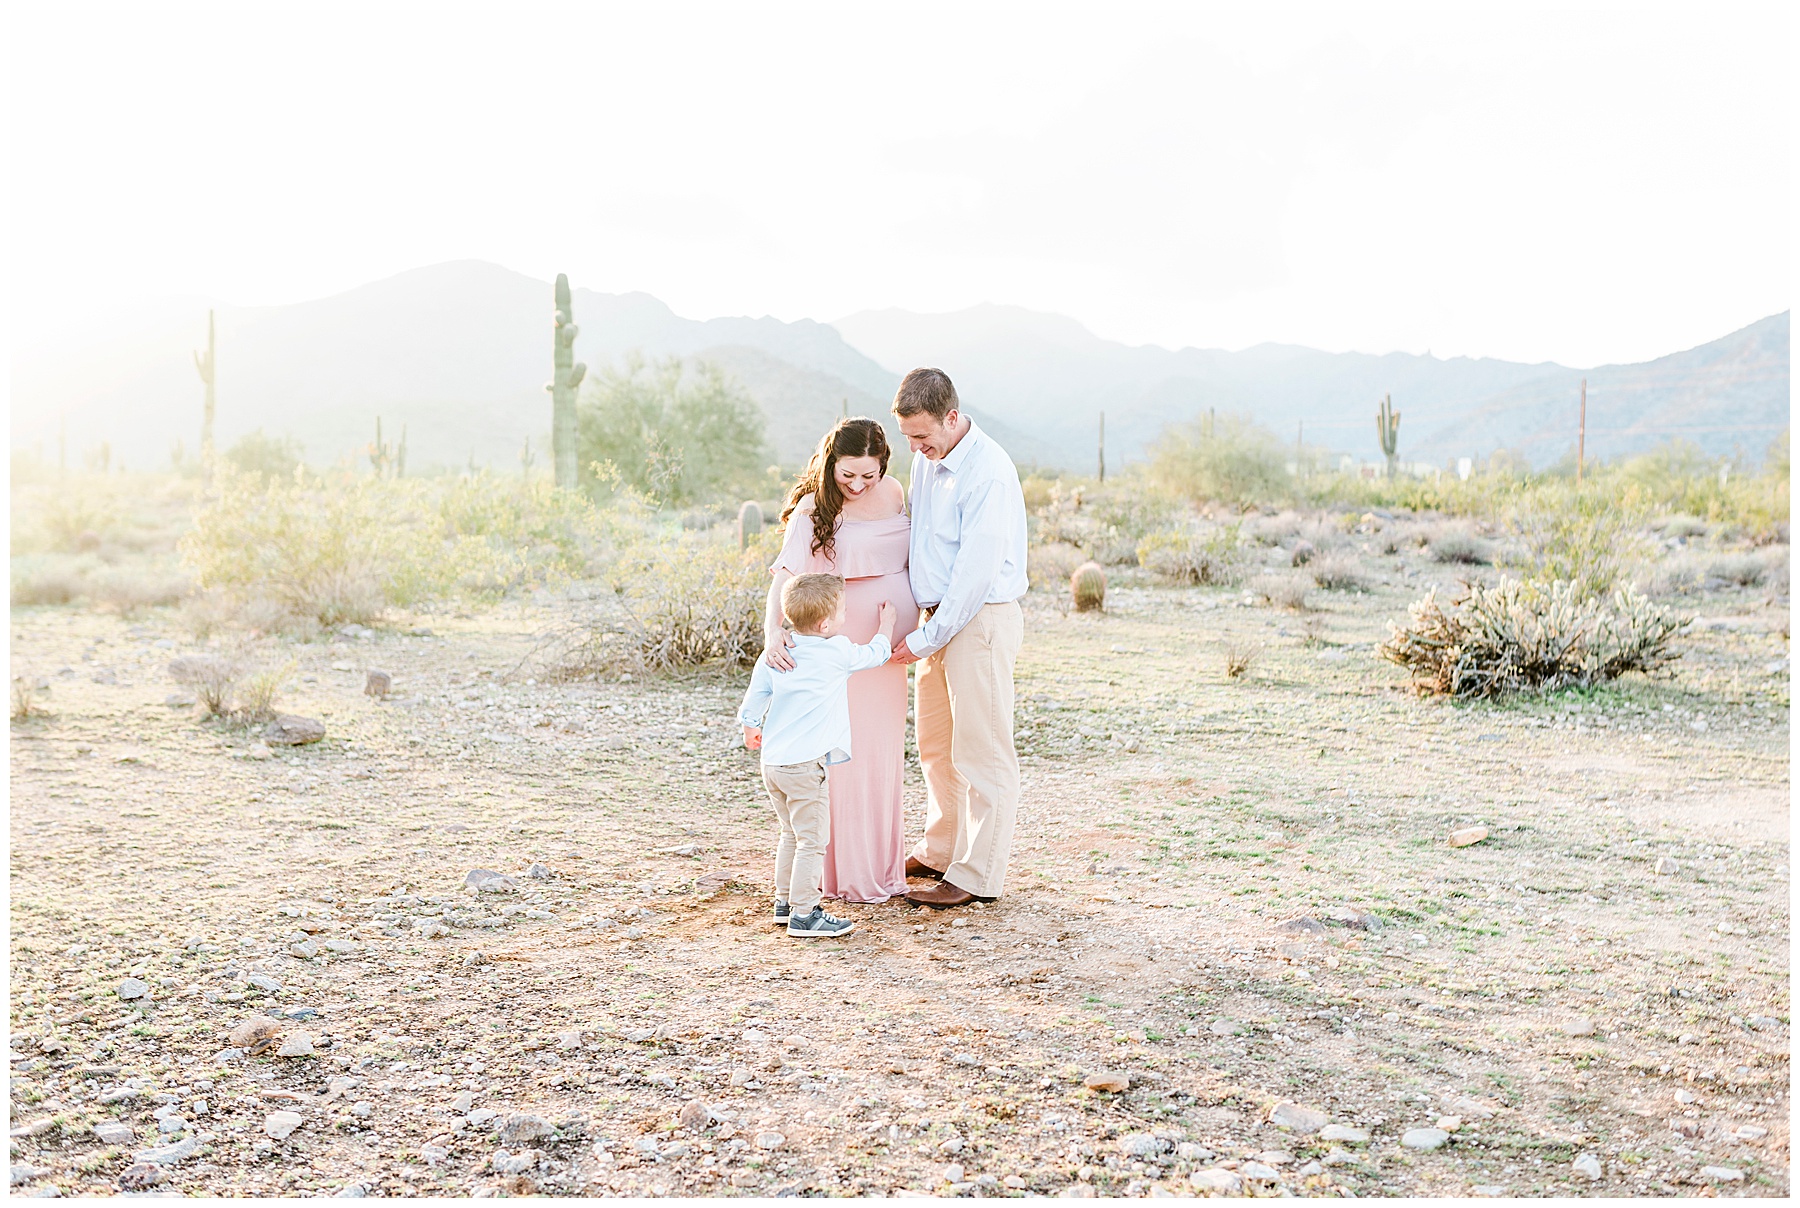 Wheeler's-Maternity-Family-Session-Waddell-Arizona-Ashley-Flug-Photography31.jpg